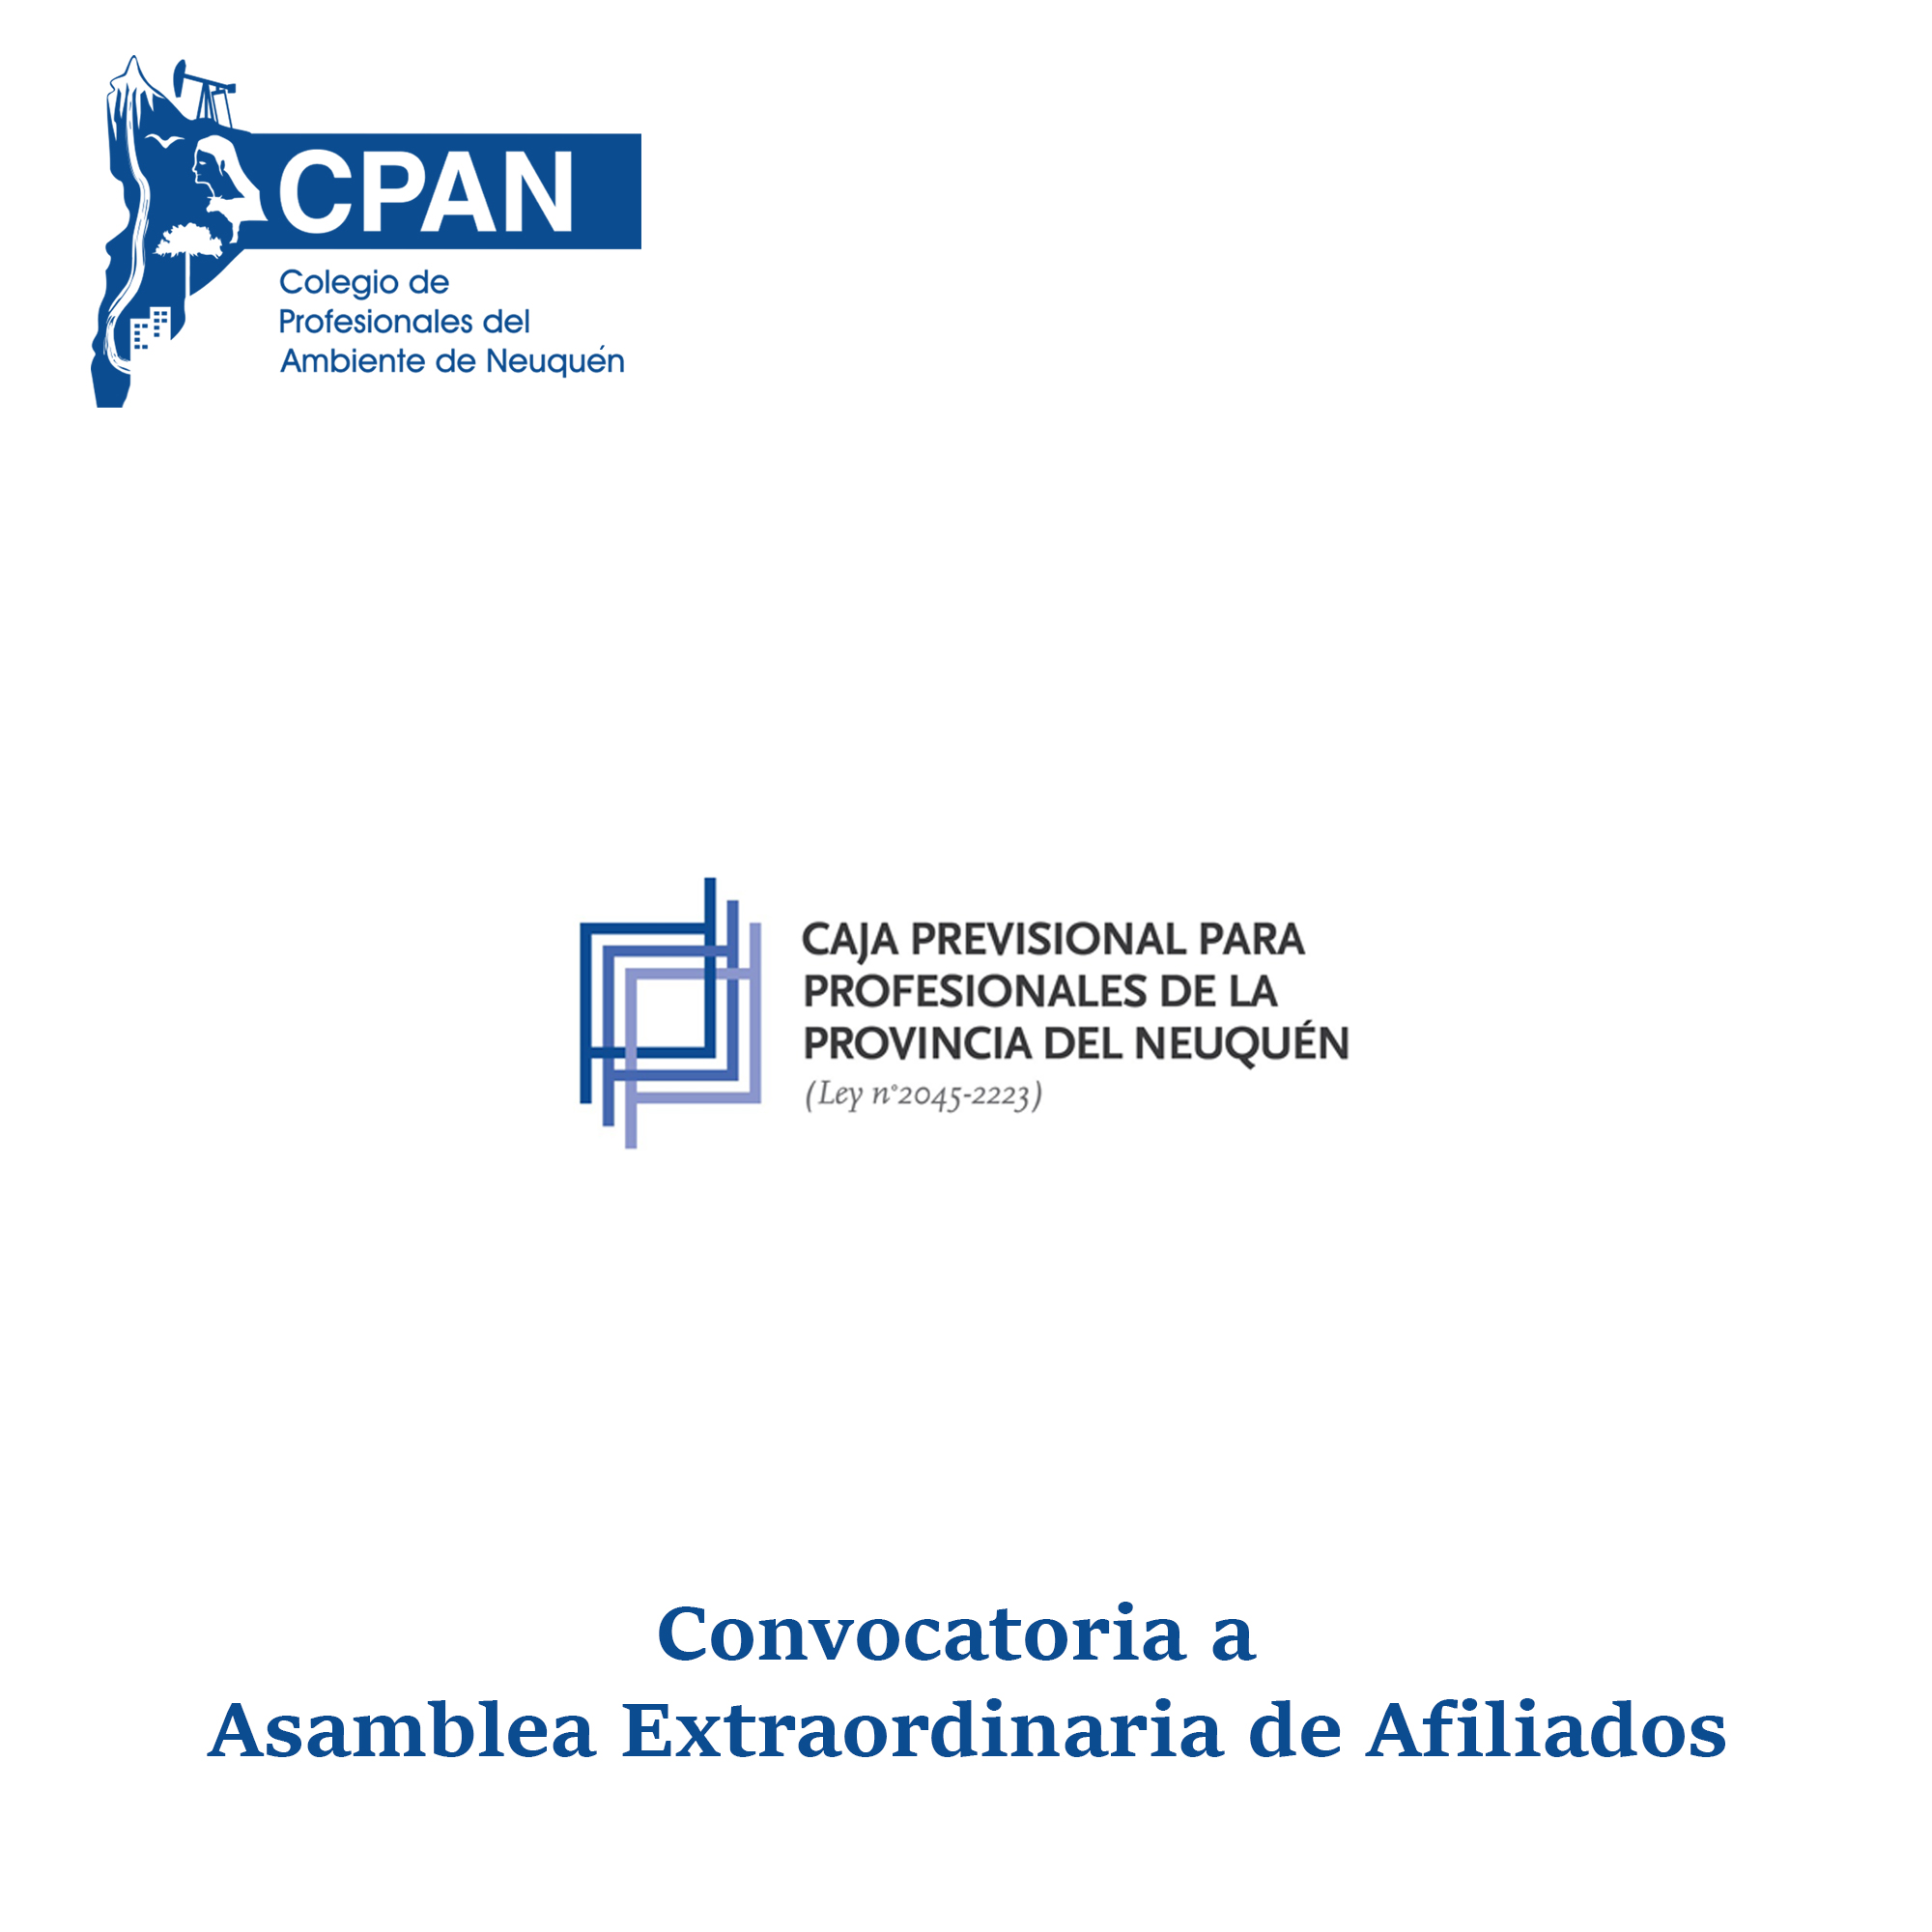 Convocatoria-a-Asamblea-Extraordinaria-de-Afiliados-de-la-Caja-Previsional-para-Profesionales-de-la-Provincia-del-Neuquén